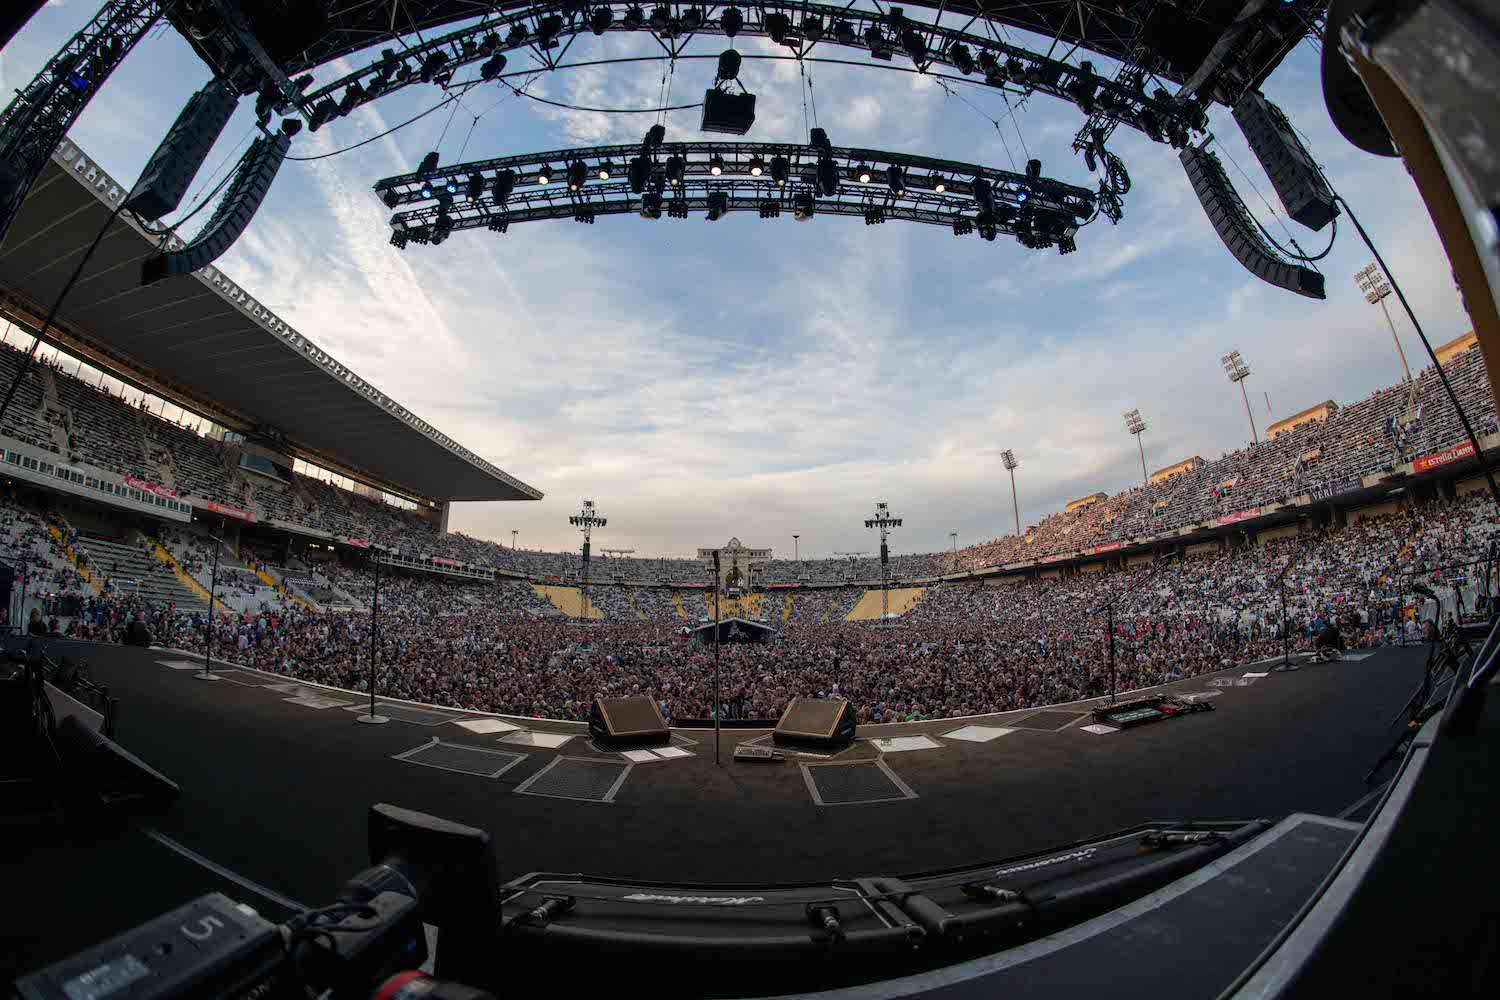 Bruce Springsteen & E Street Band at Estadi Olímpic, Barcelona, Spain on April 28, 2023.